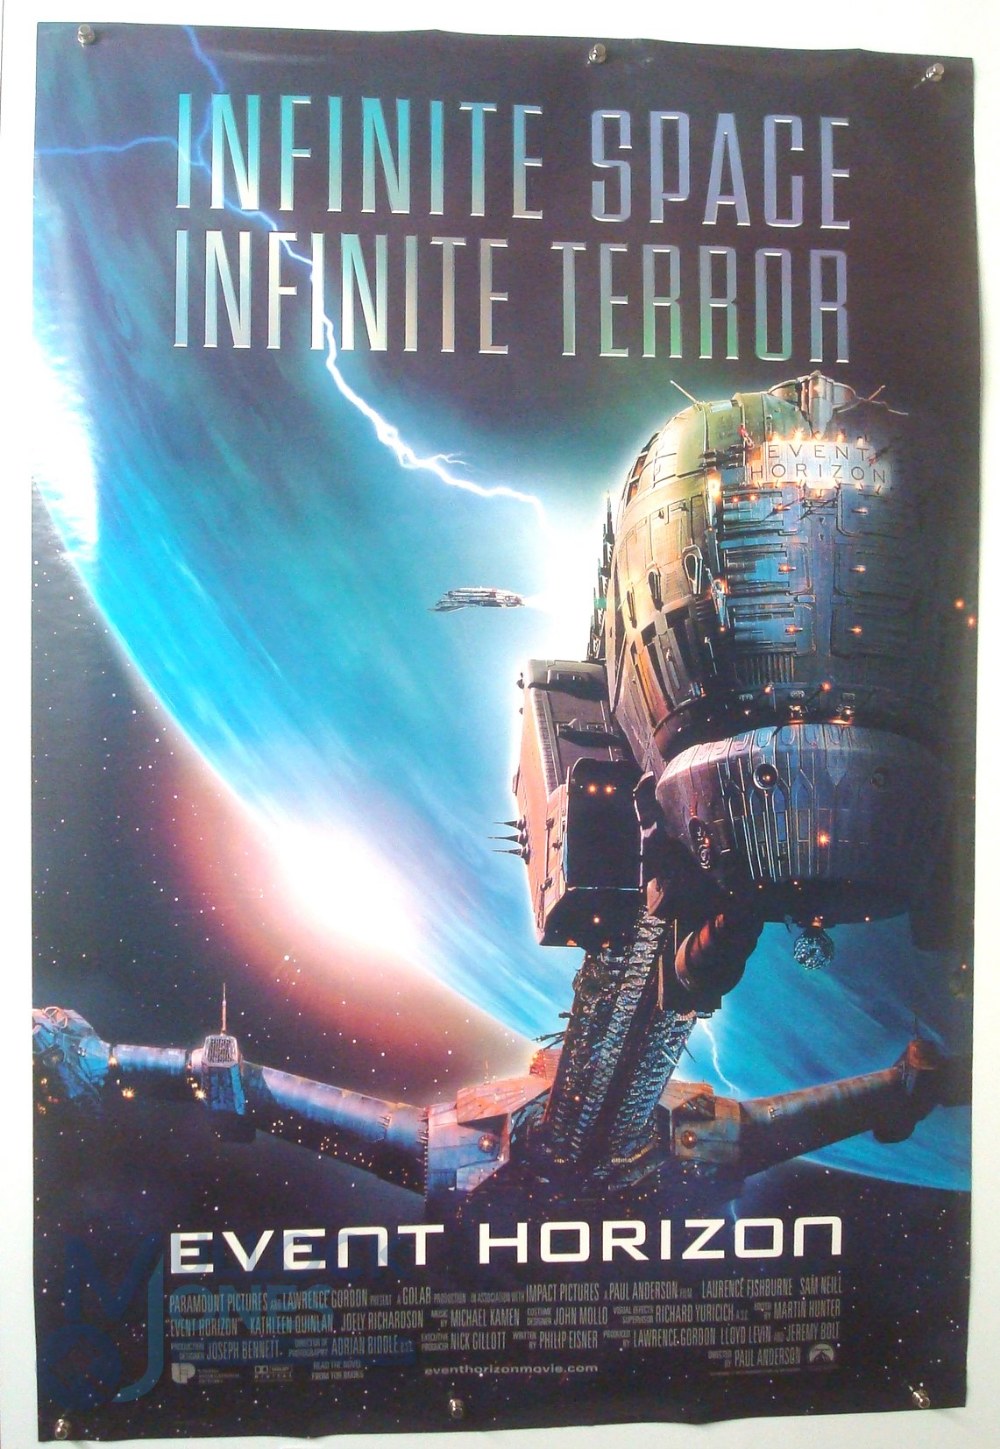 Original Movie/Film Poster - 1997 Speed 2 Cruise Control, 1997 Event Horizon, 2001 Proof of Life - - Image 2 of 3